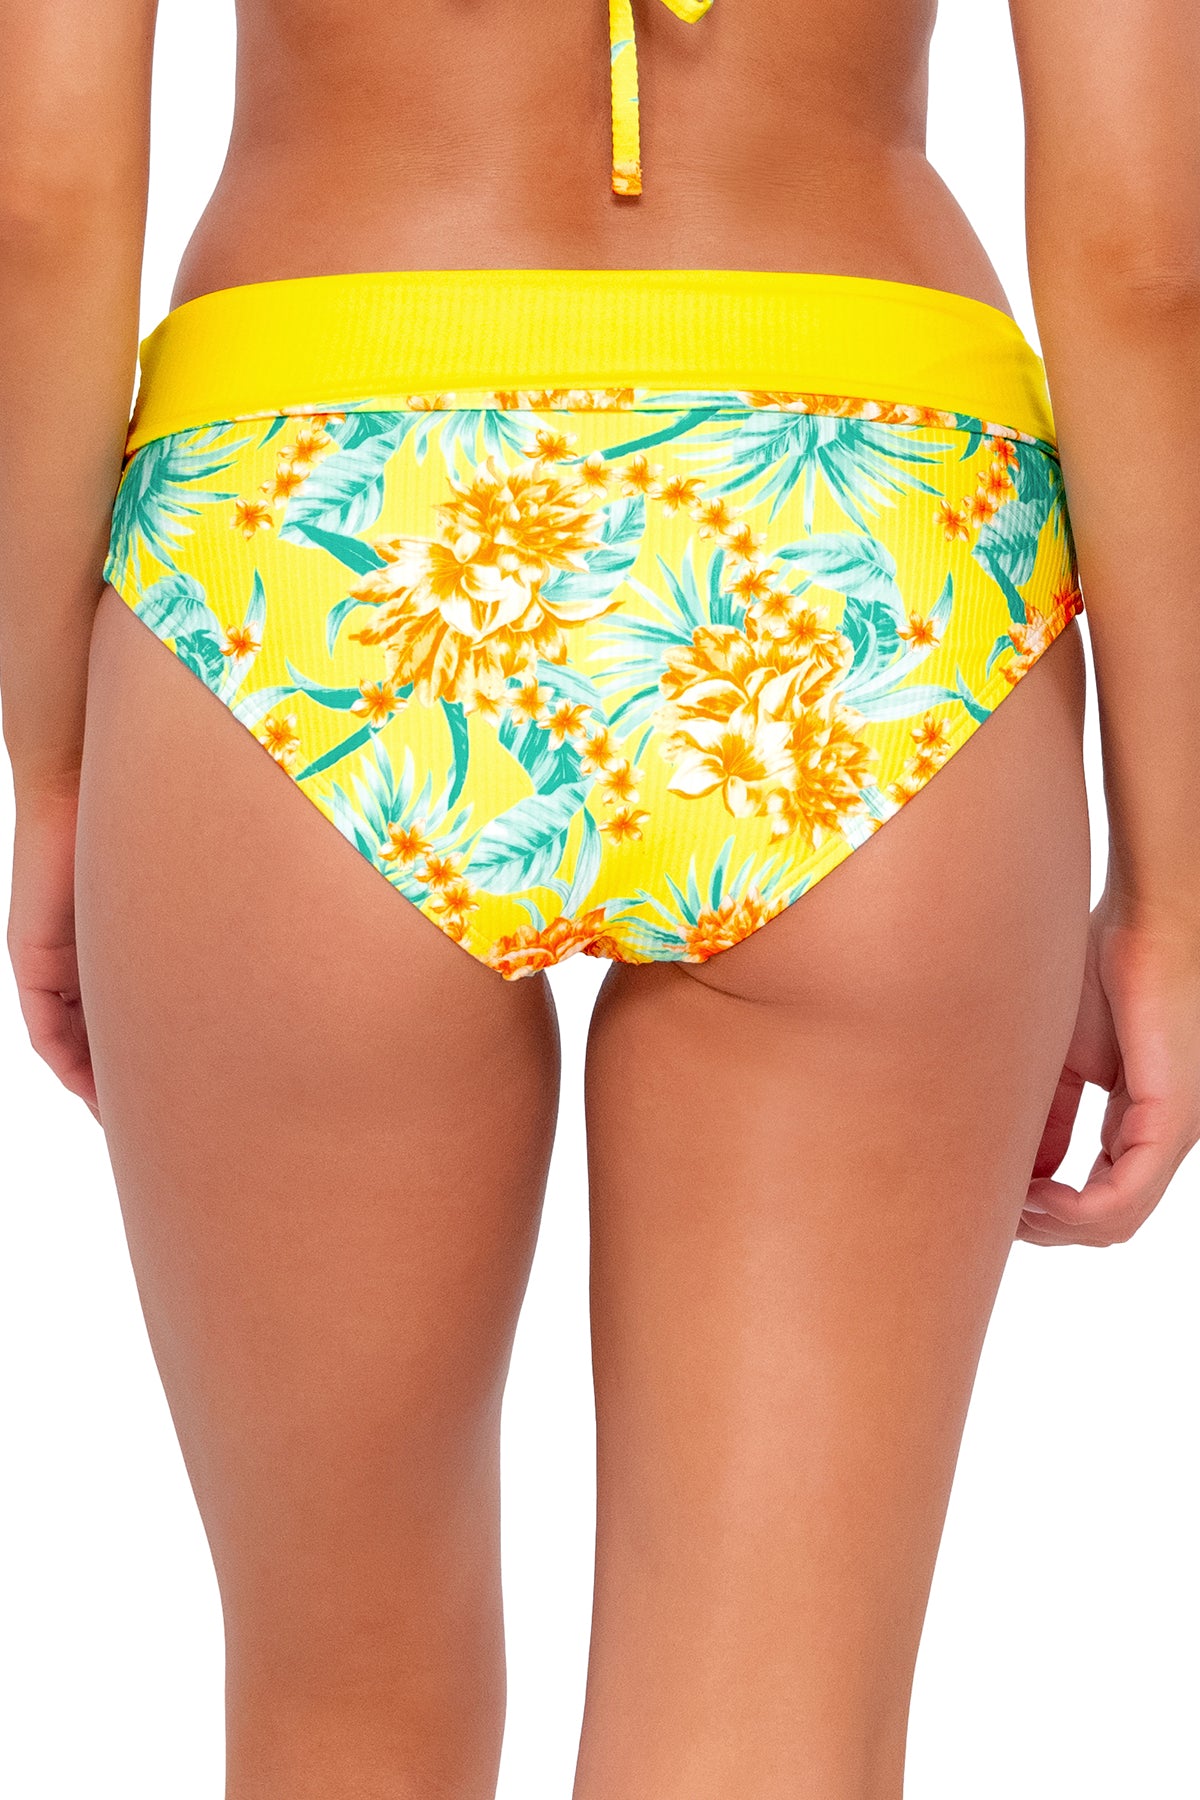 Back pose #1 of Daria wearing Sunsets Golden Tropics Sandbar Rib Capri High Waist Bottom showing folded waist